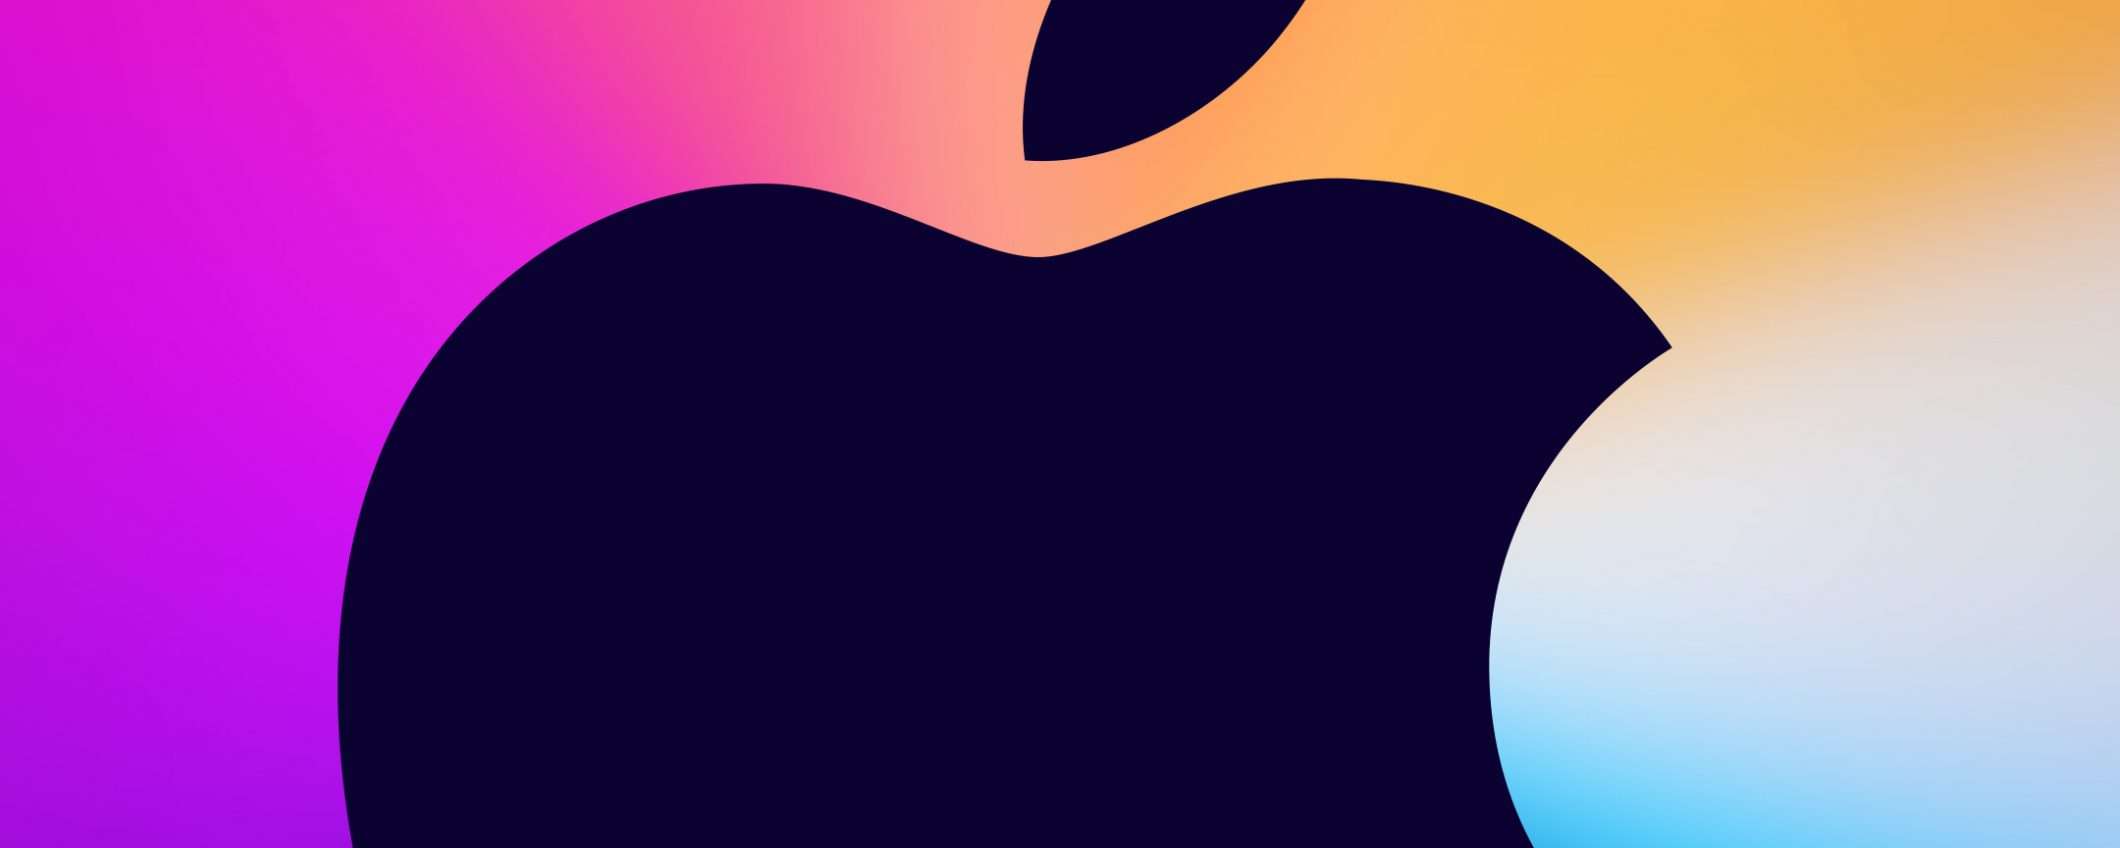 Apple, One More Thing: segui qui l'evento